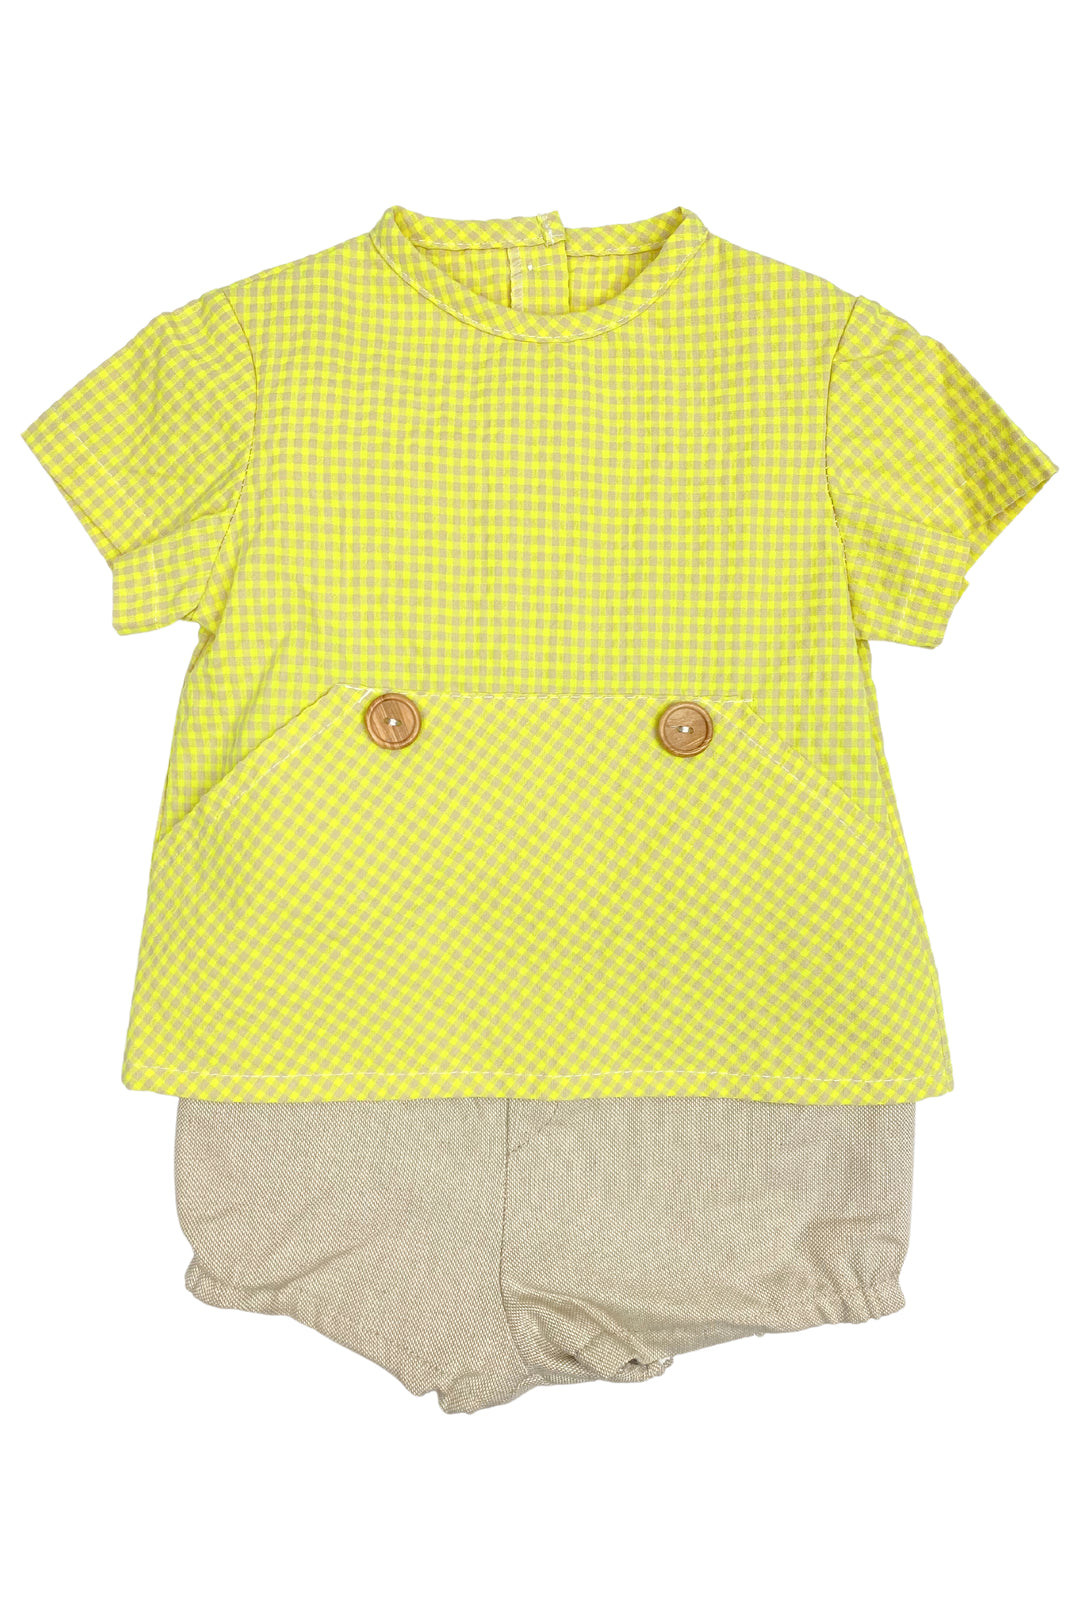 Valentina Bebes "Riley" Yellow & Beige Gingham Shirt & Shorts | Millie and John